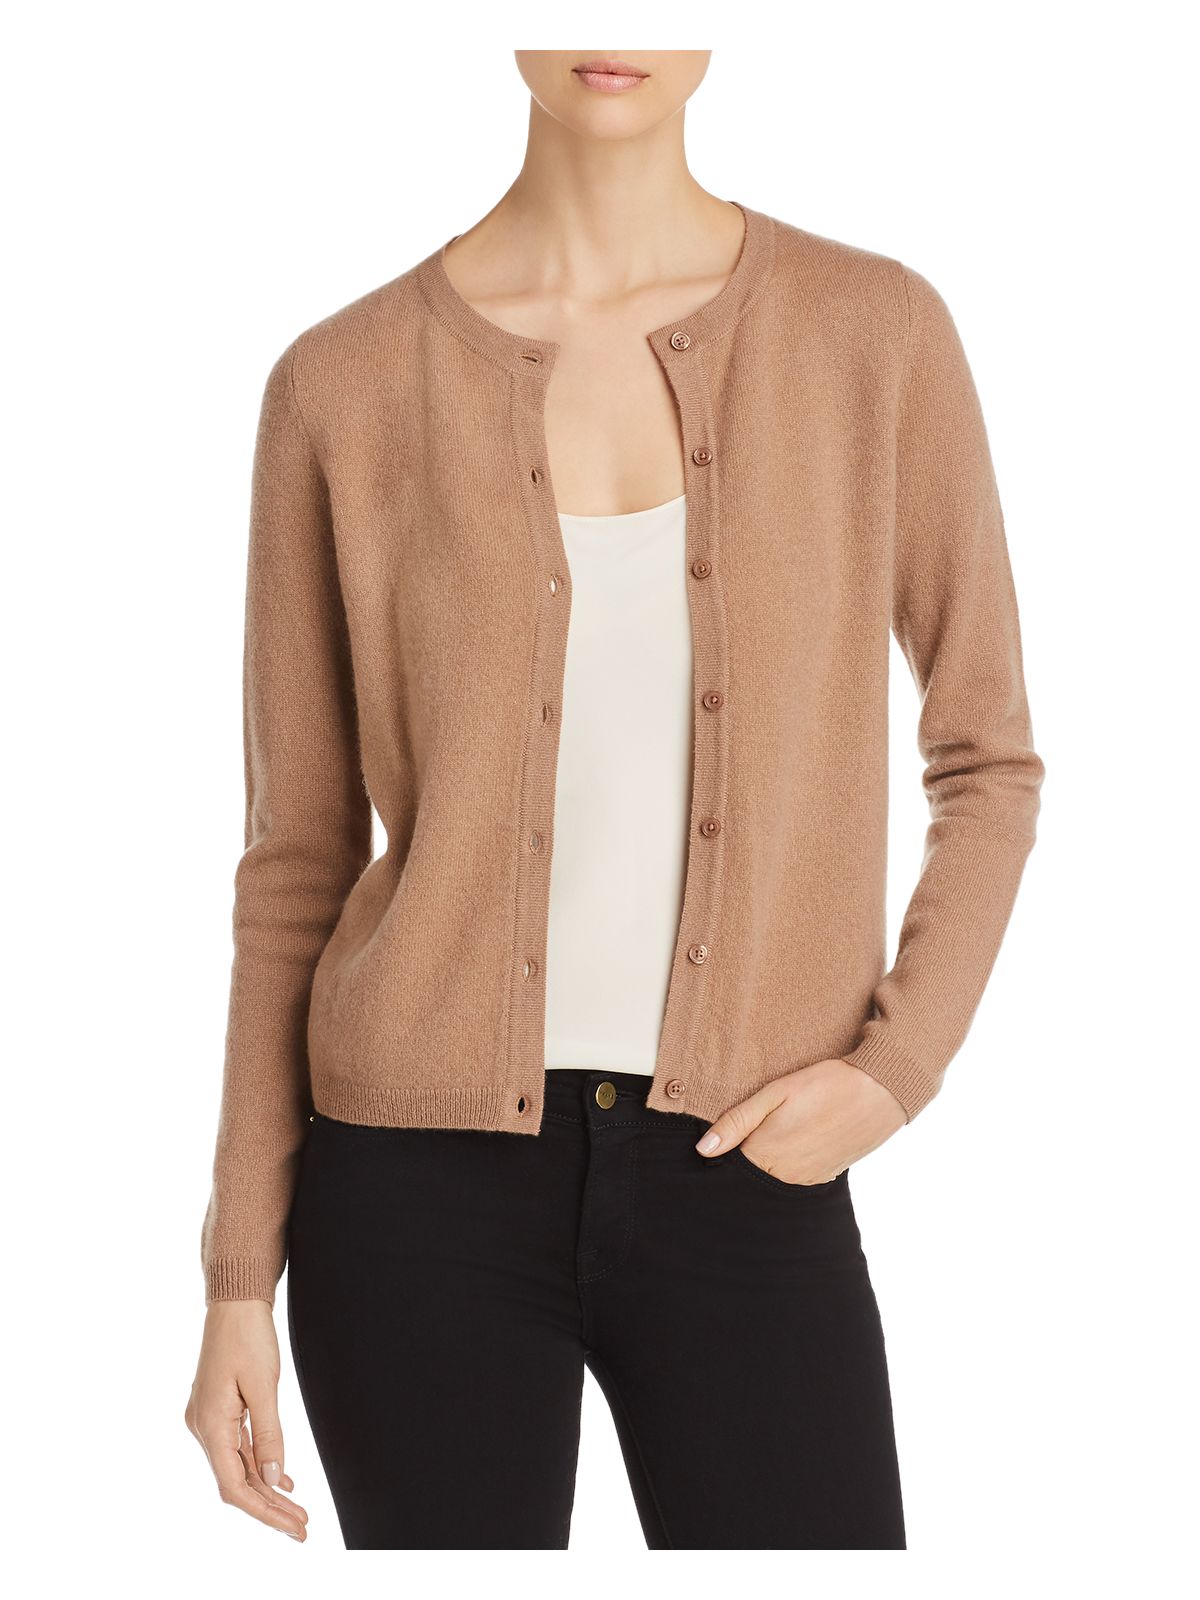 Designer Brand Womens Brown Long Sleeve Crew Neck Button Up Sweater XS